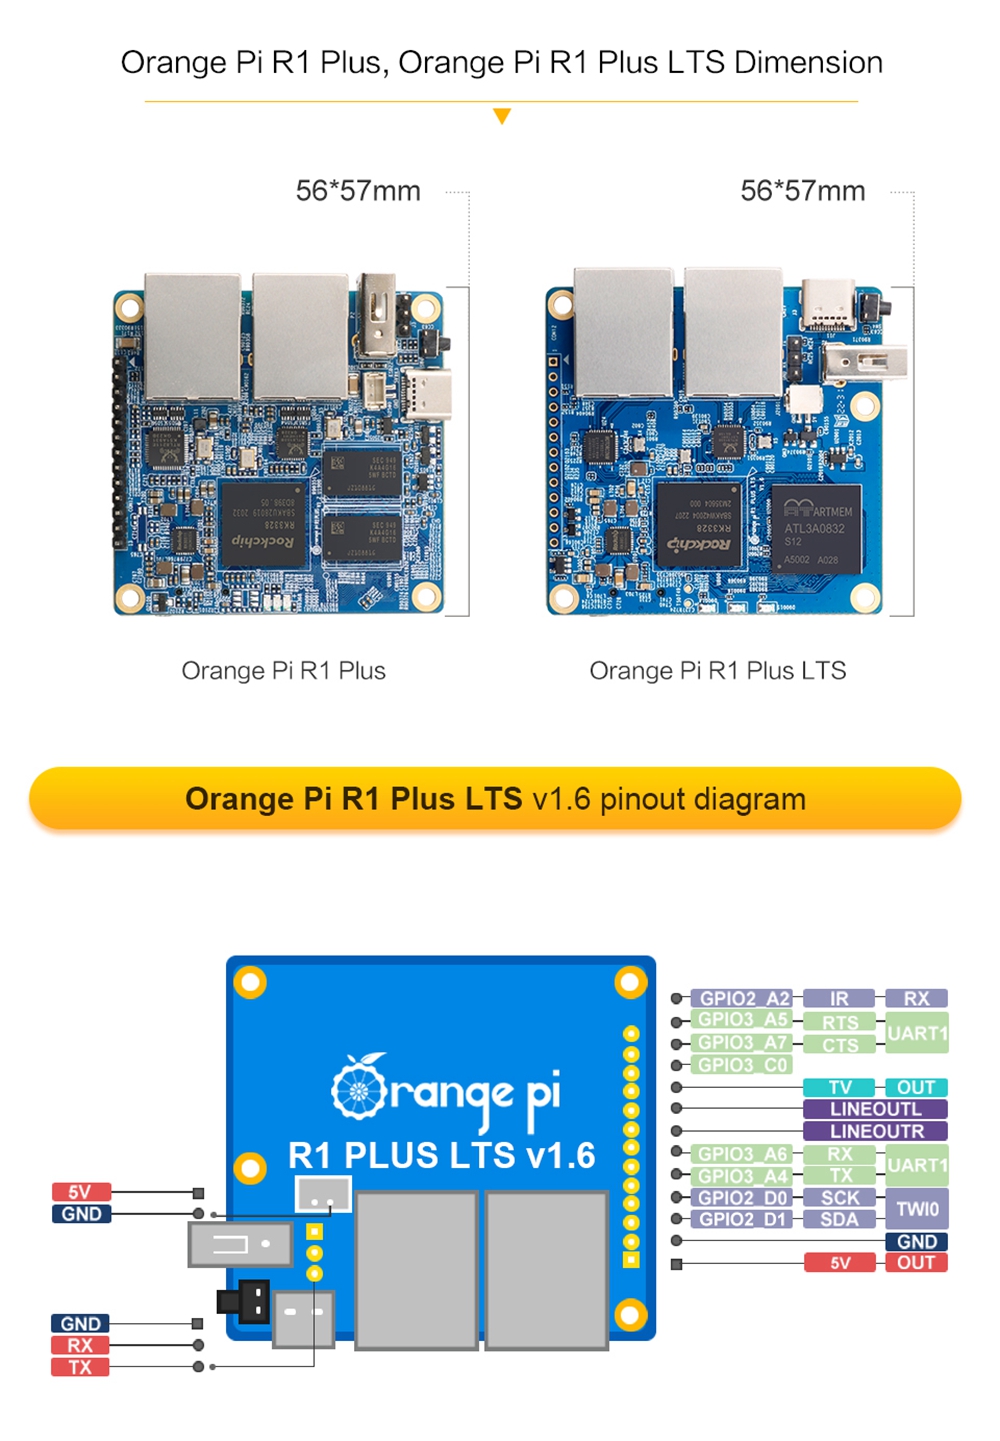 Orange Pi R1 Plus LTS 1GB RAM Rockchip RK3328 Open Source Single Board Computer Run Android 9 Ubuntu Debian OS